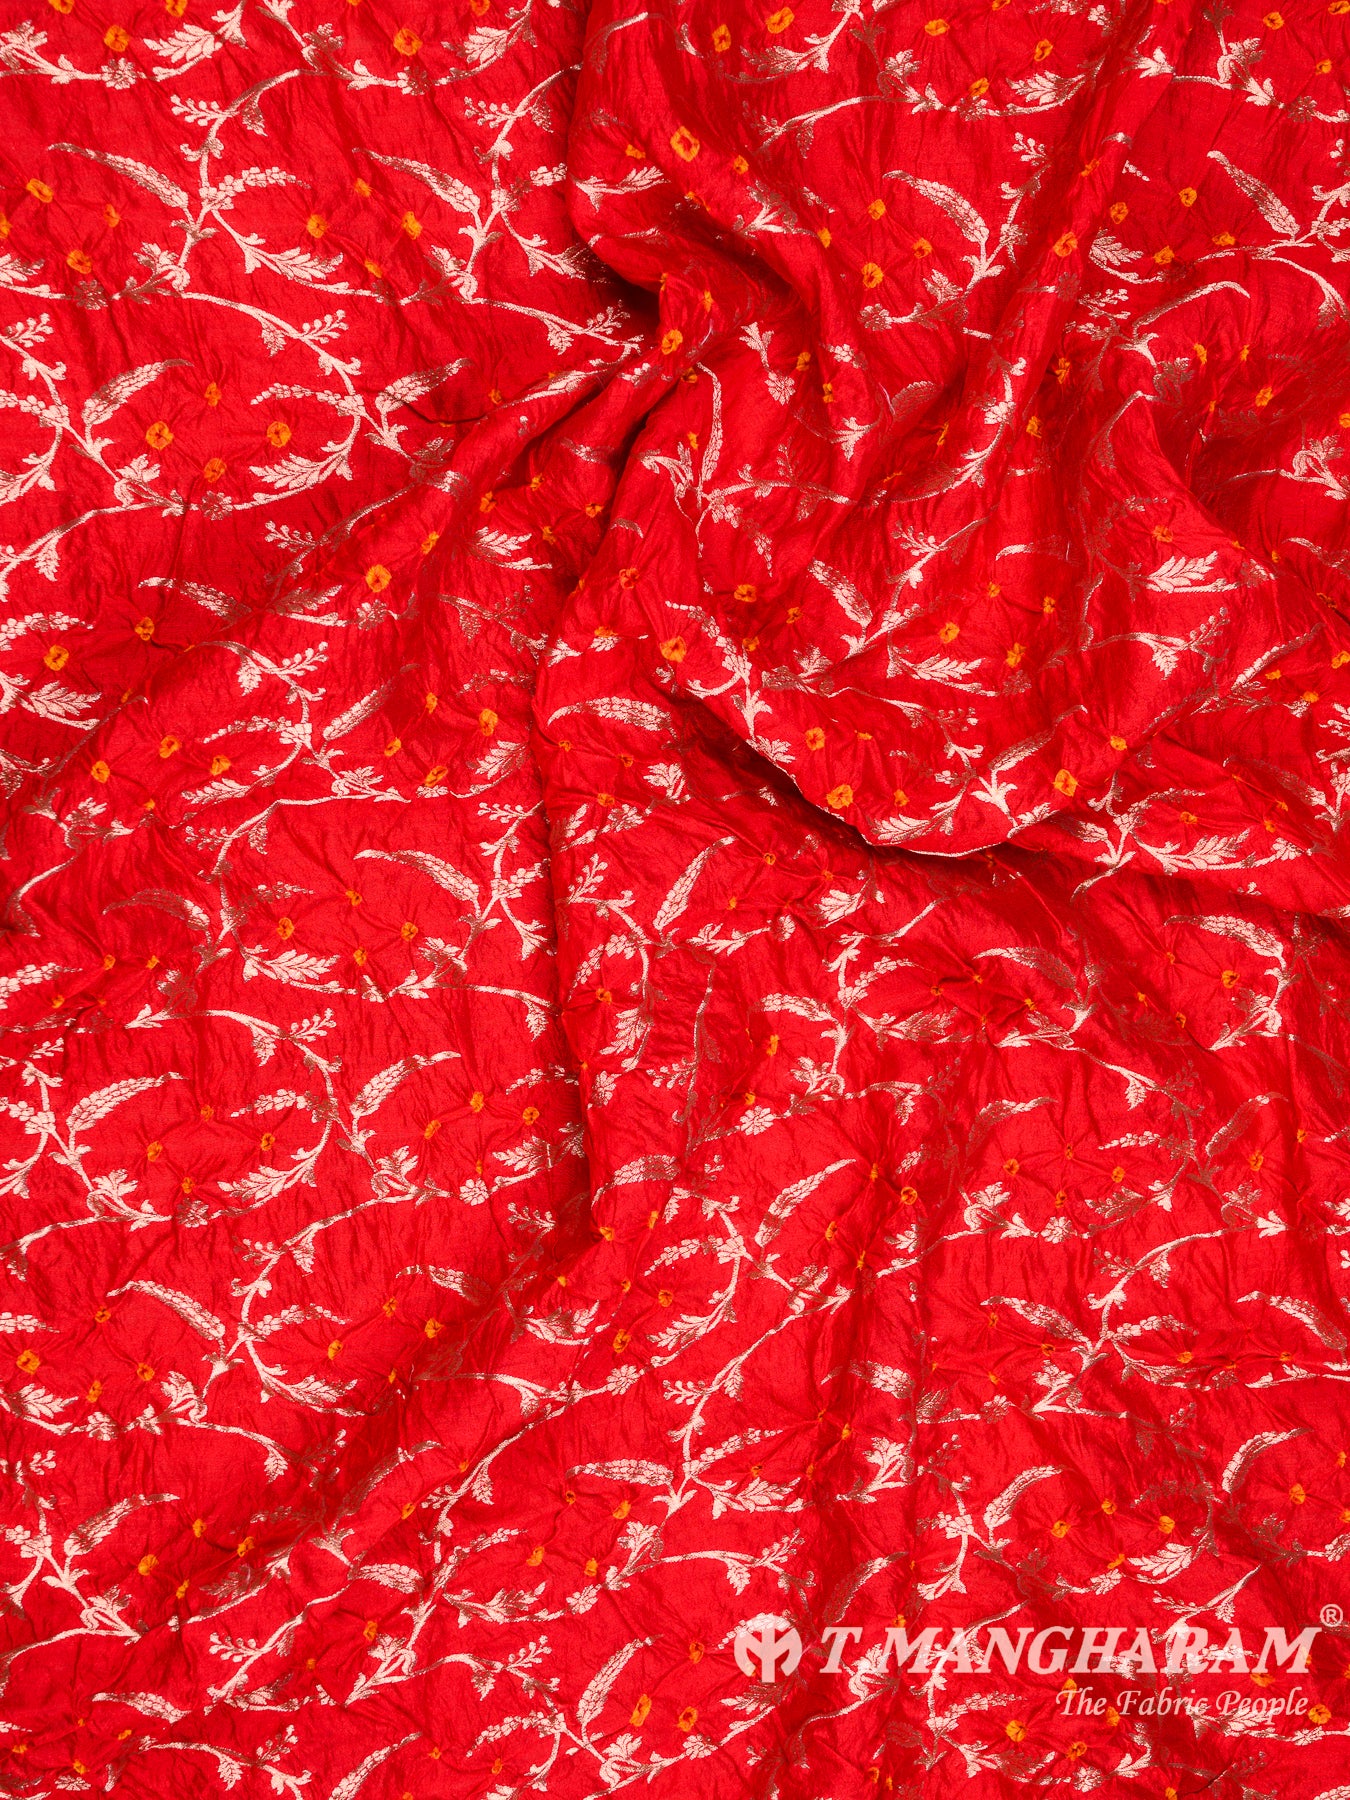 Red Banaras Fabric - EB5780 view-4